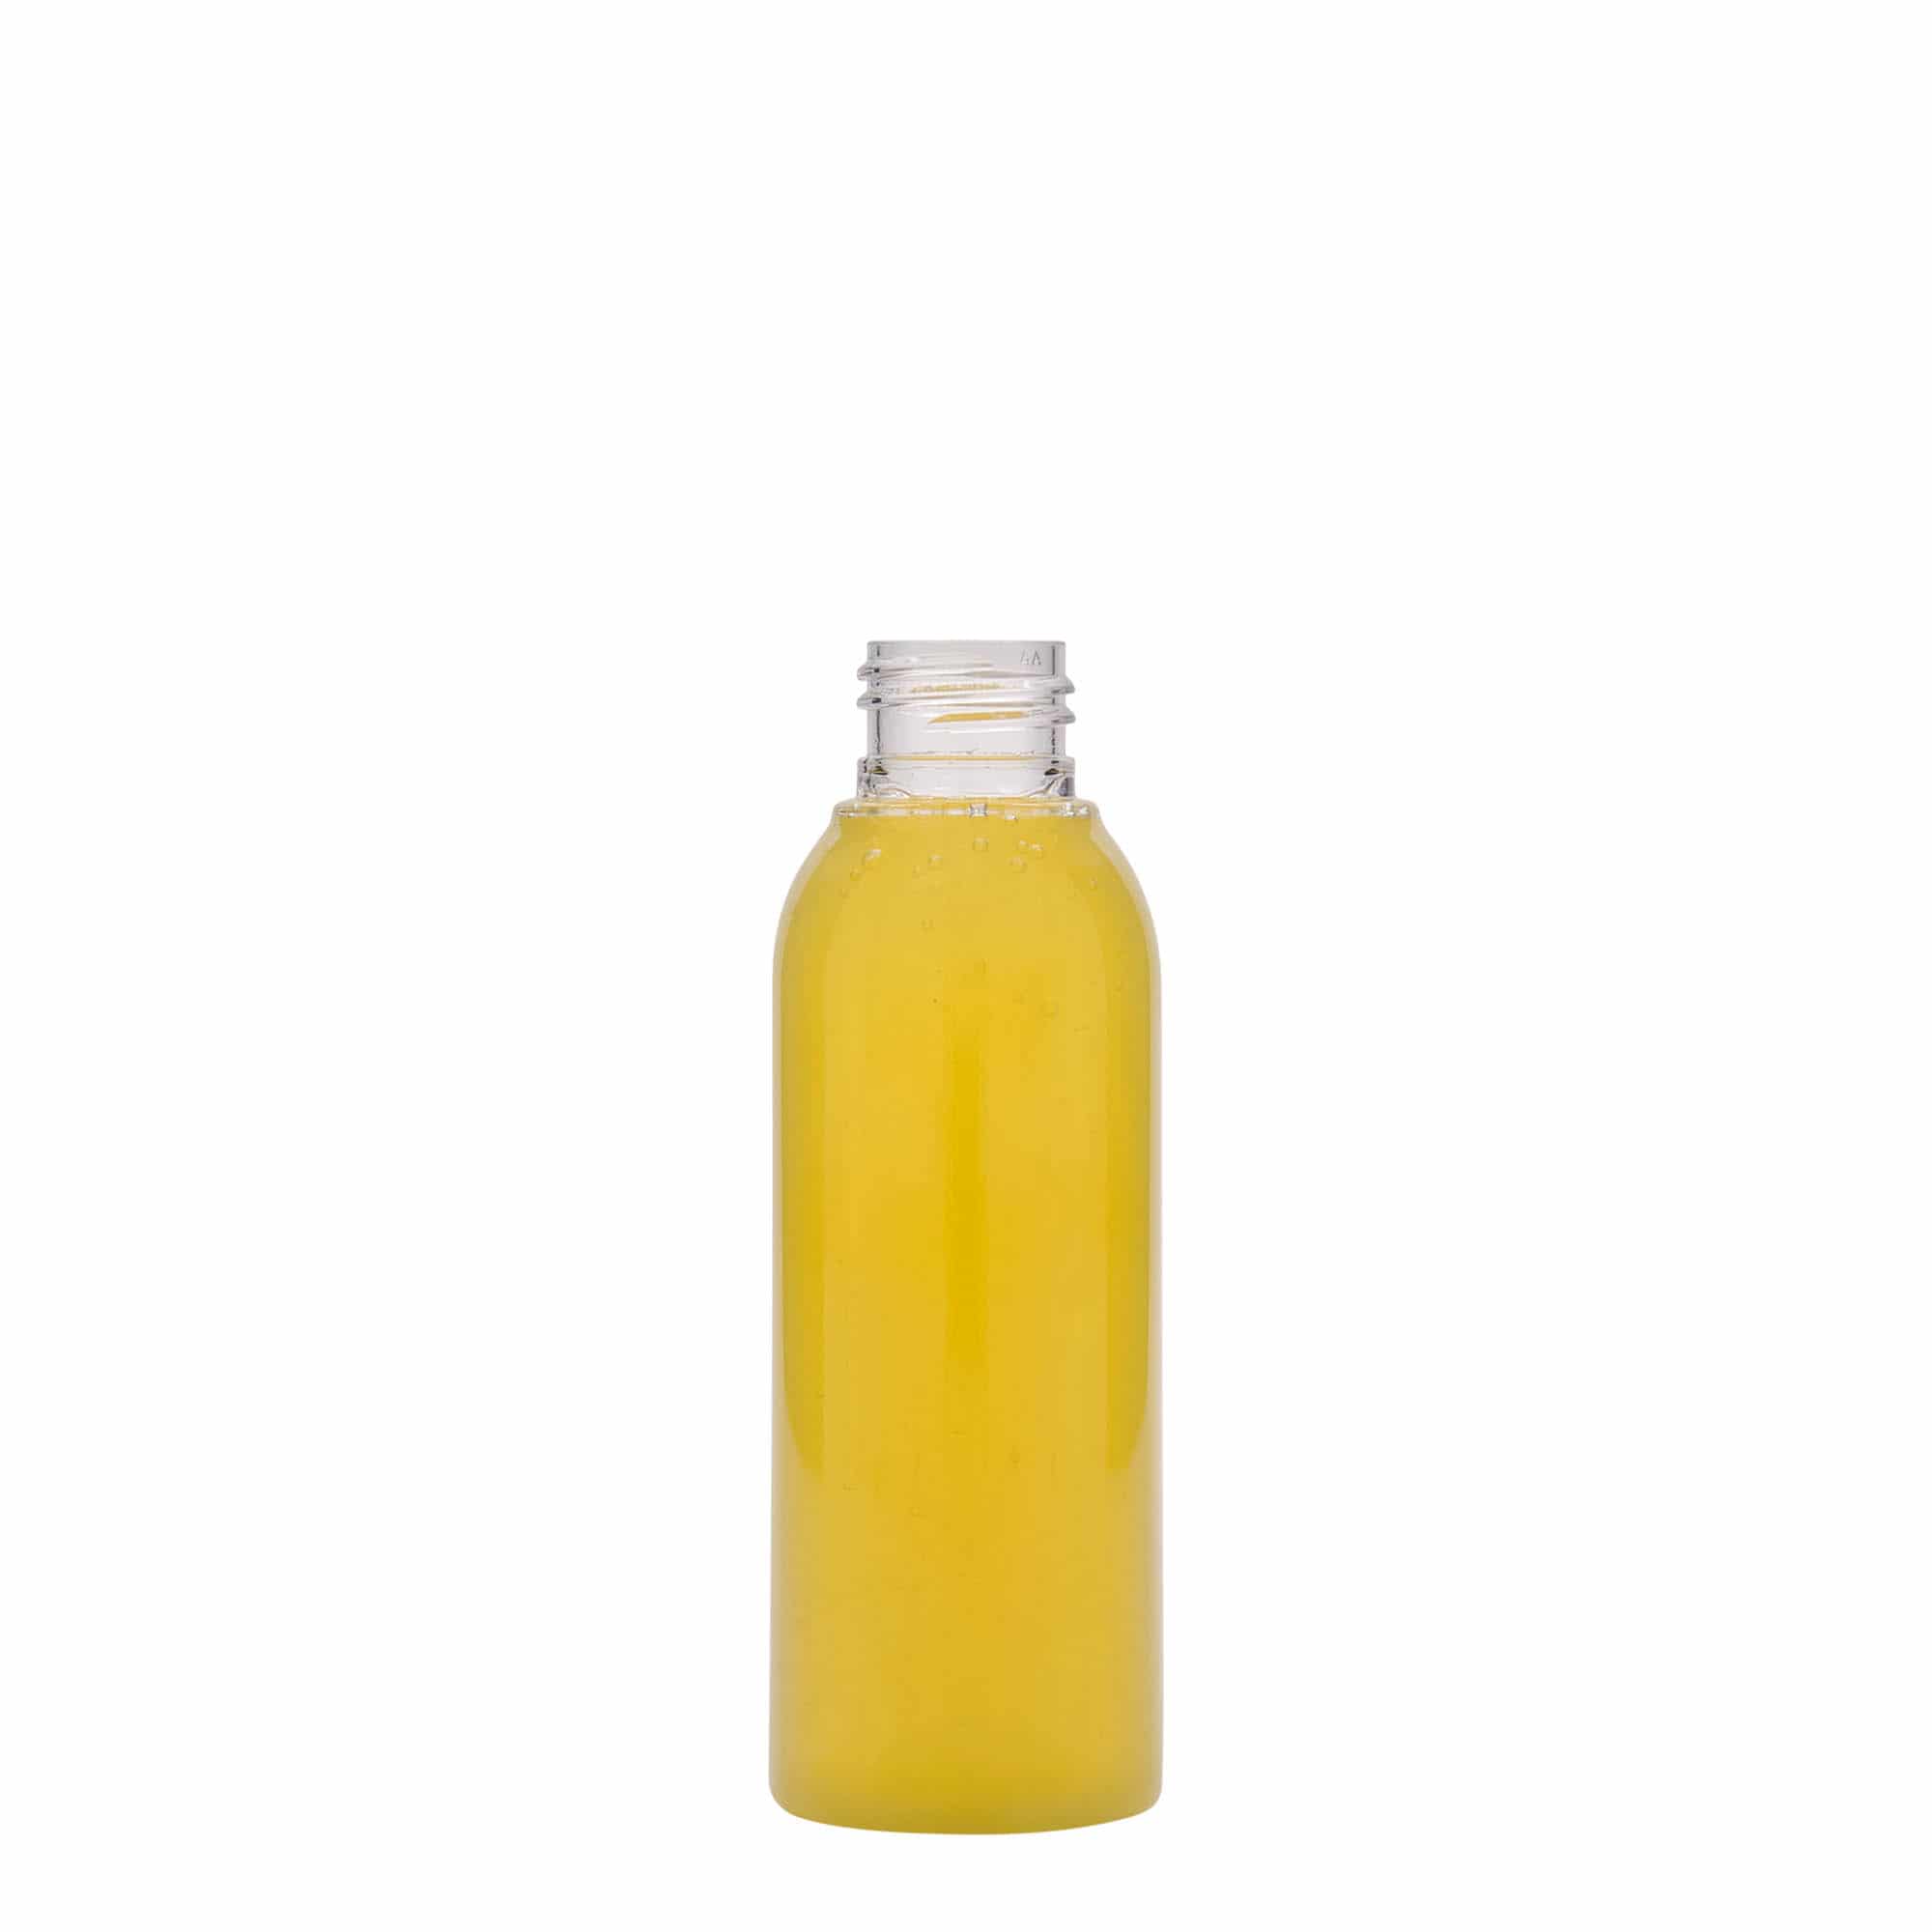 125 ml PET-flaske 'Pegasus', plast, åbning: GPI 20/410